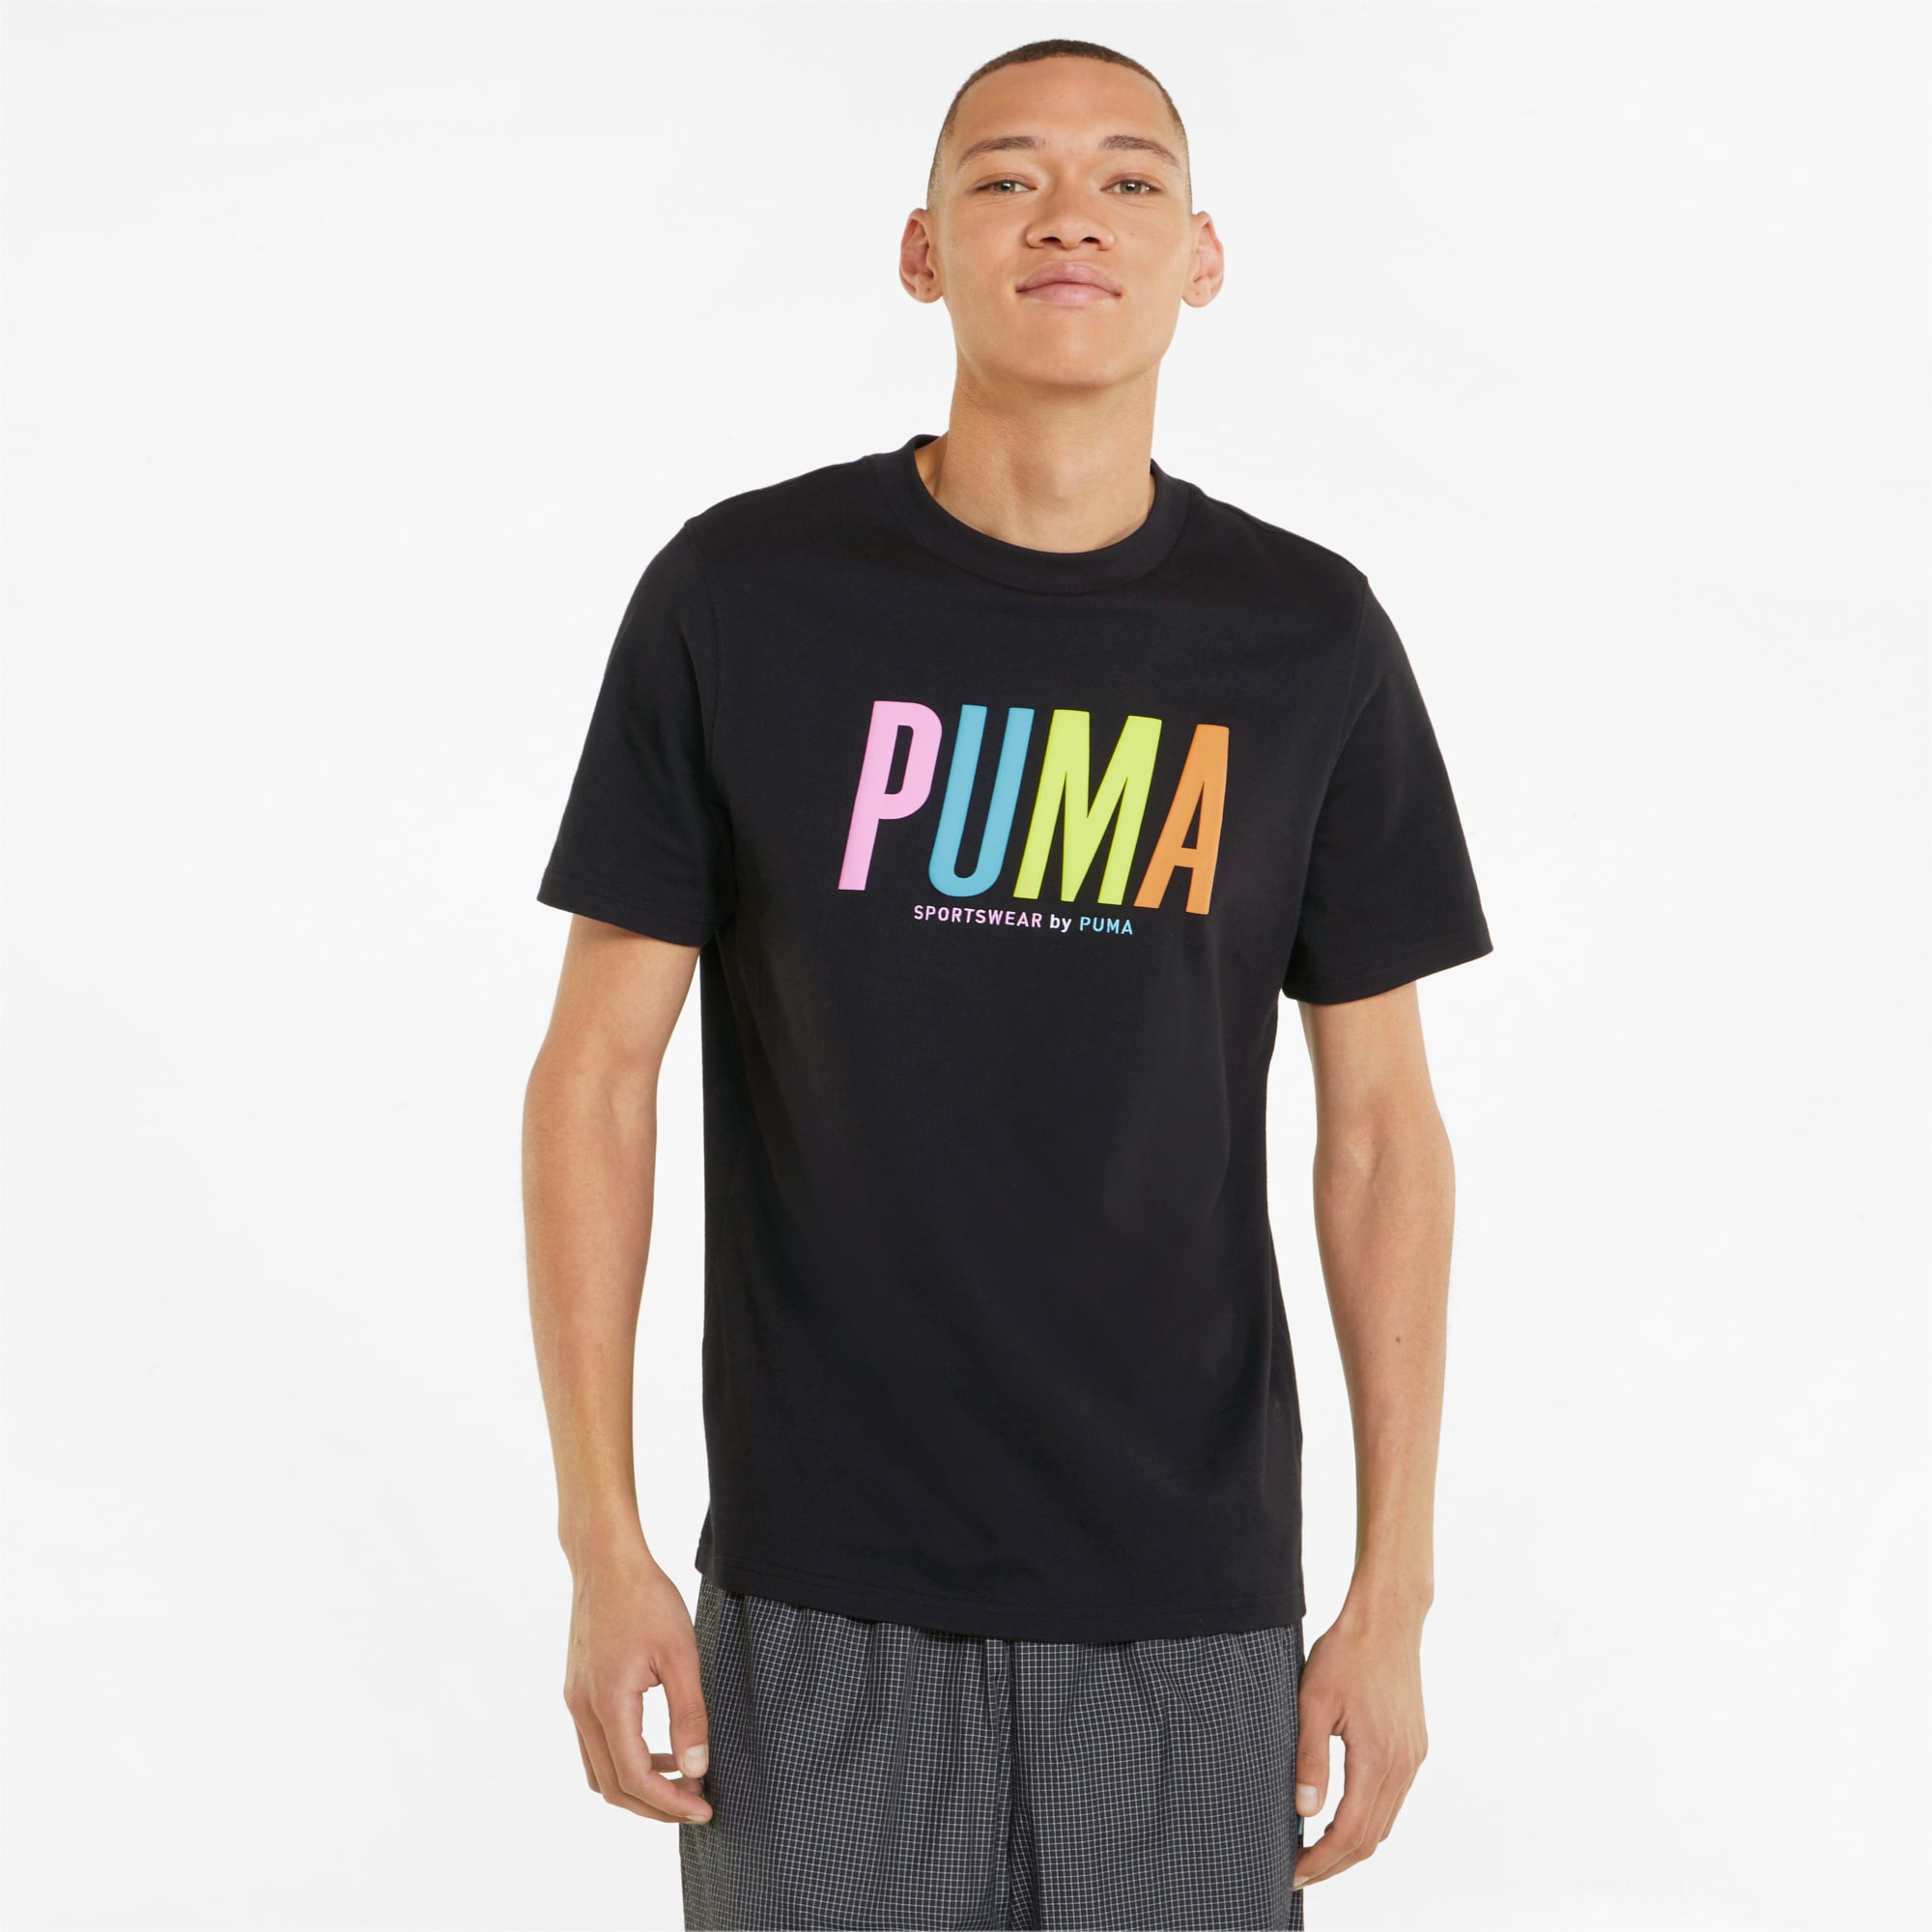 Sportswear by PUMA Graphic Men's Tee | PUMA